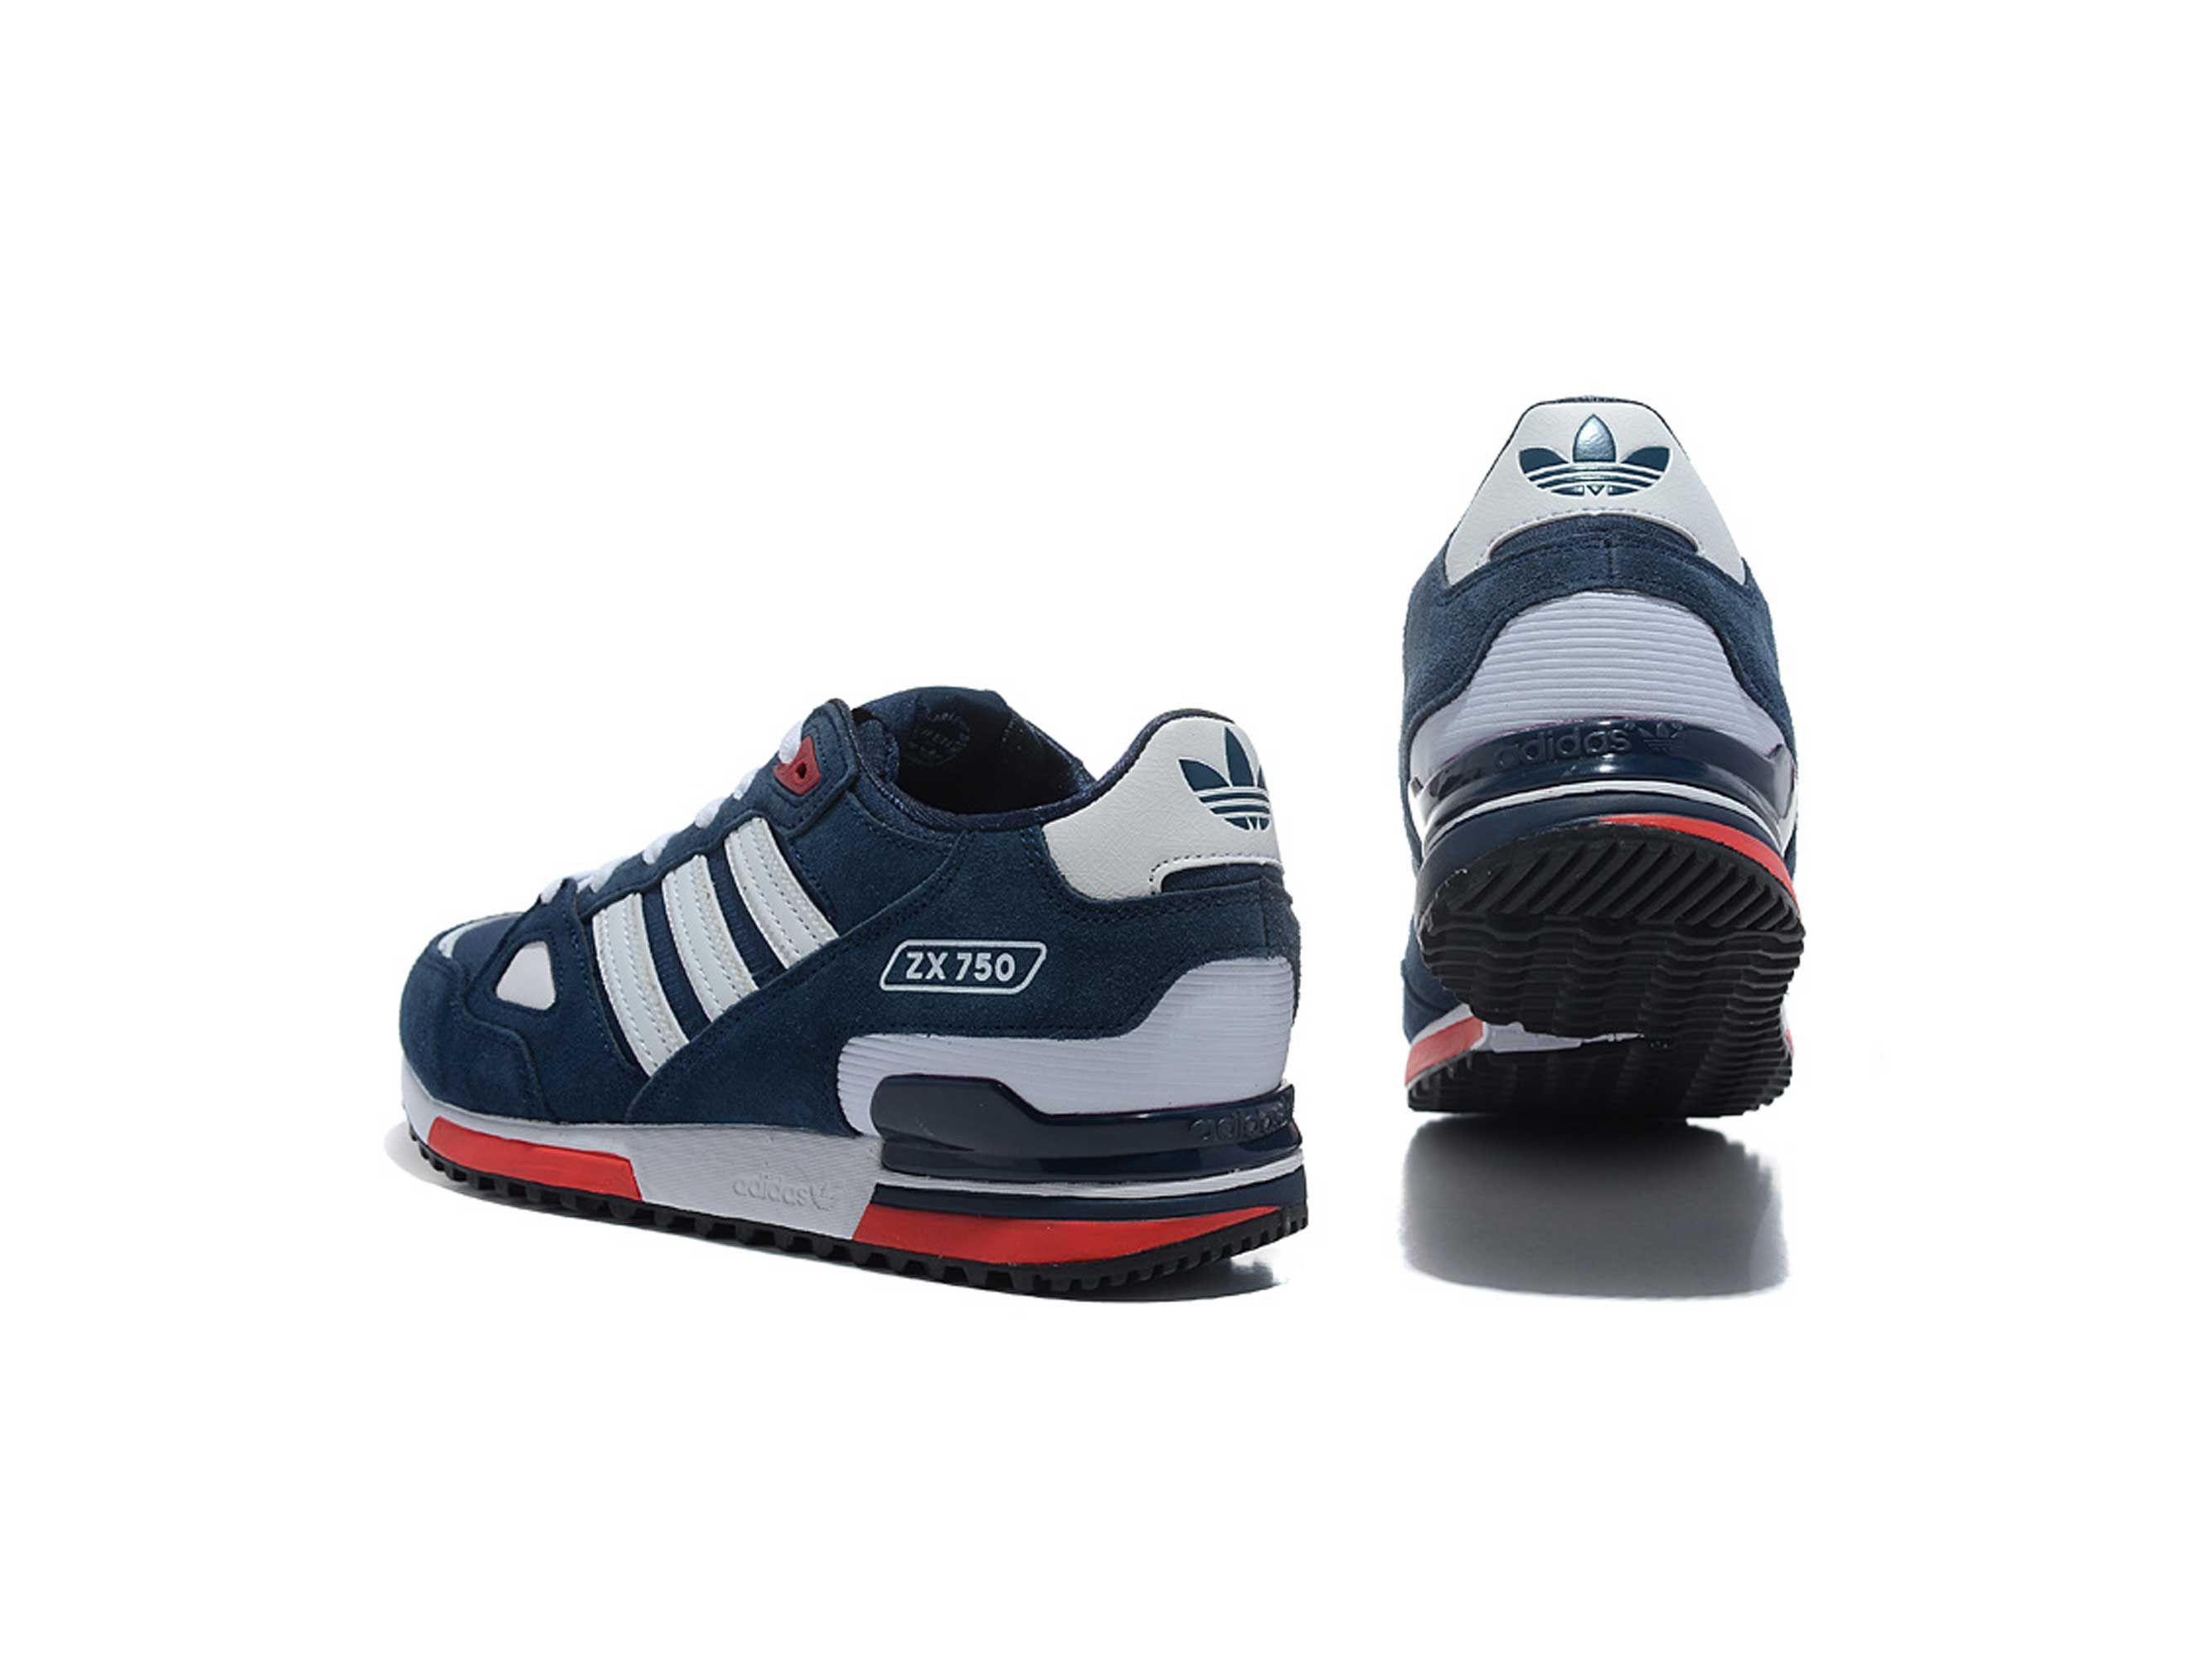 adidas originals zx 750 shoes blue white red